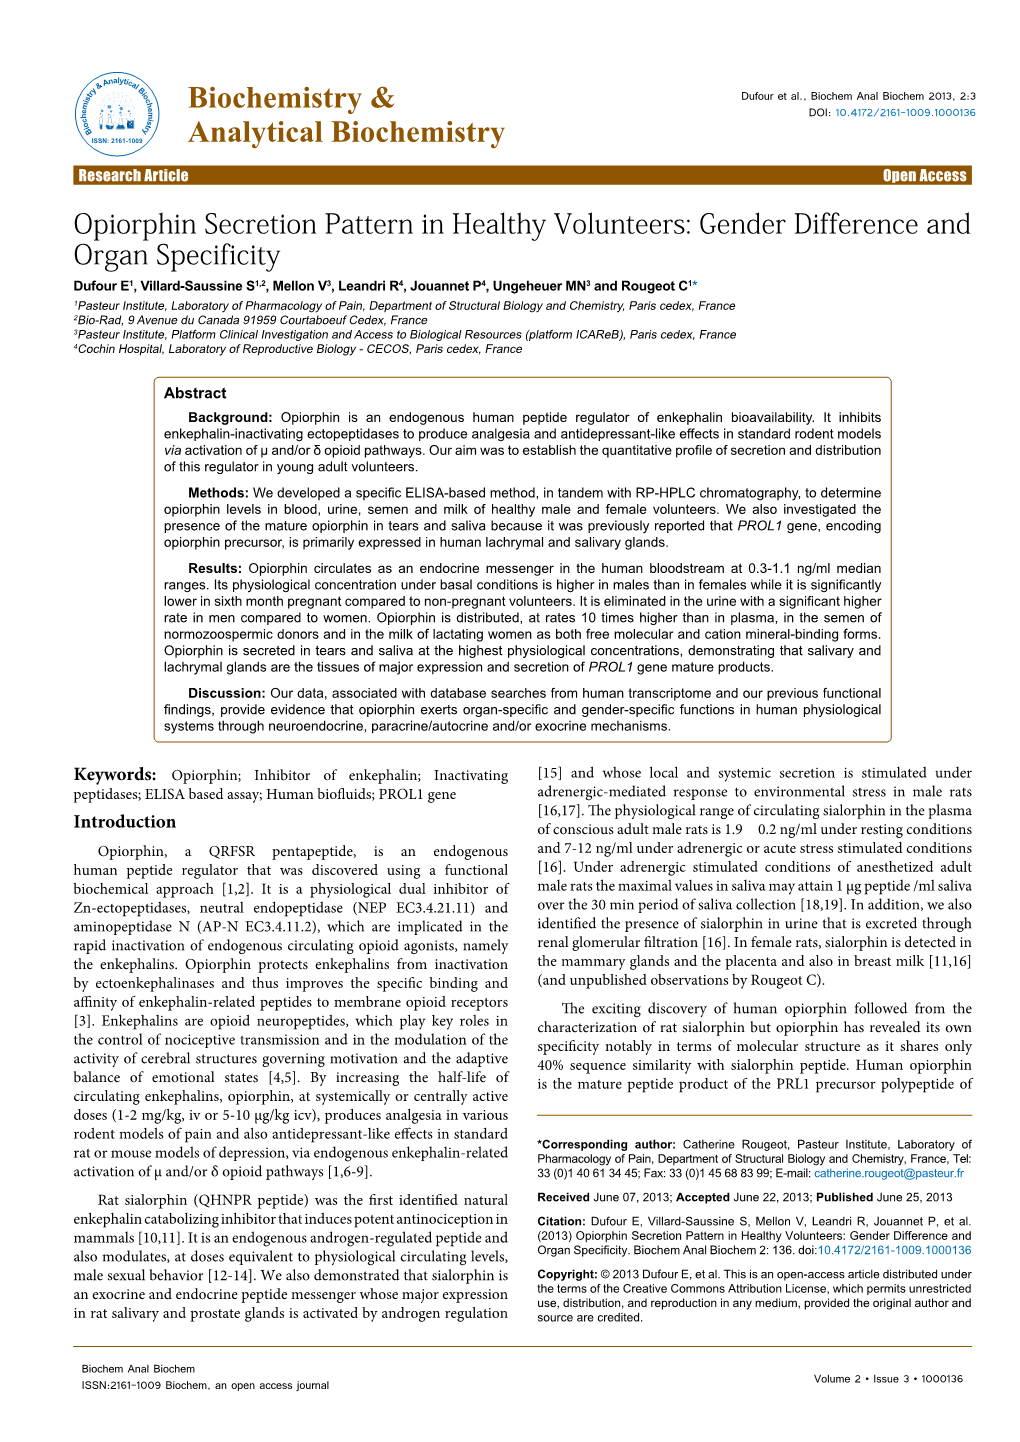 Opiorphin Secretion Pattern in Healthy Volunteers